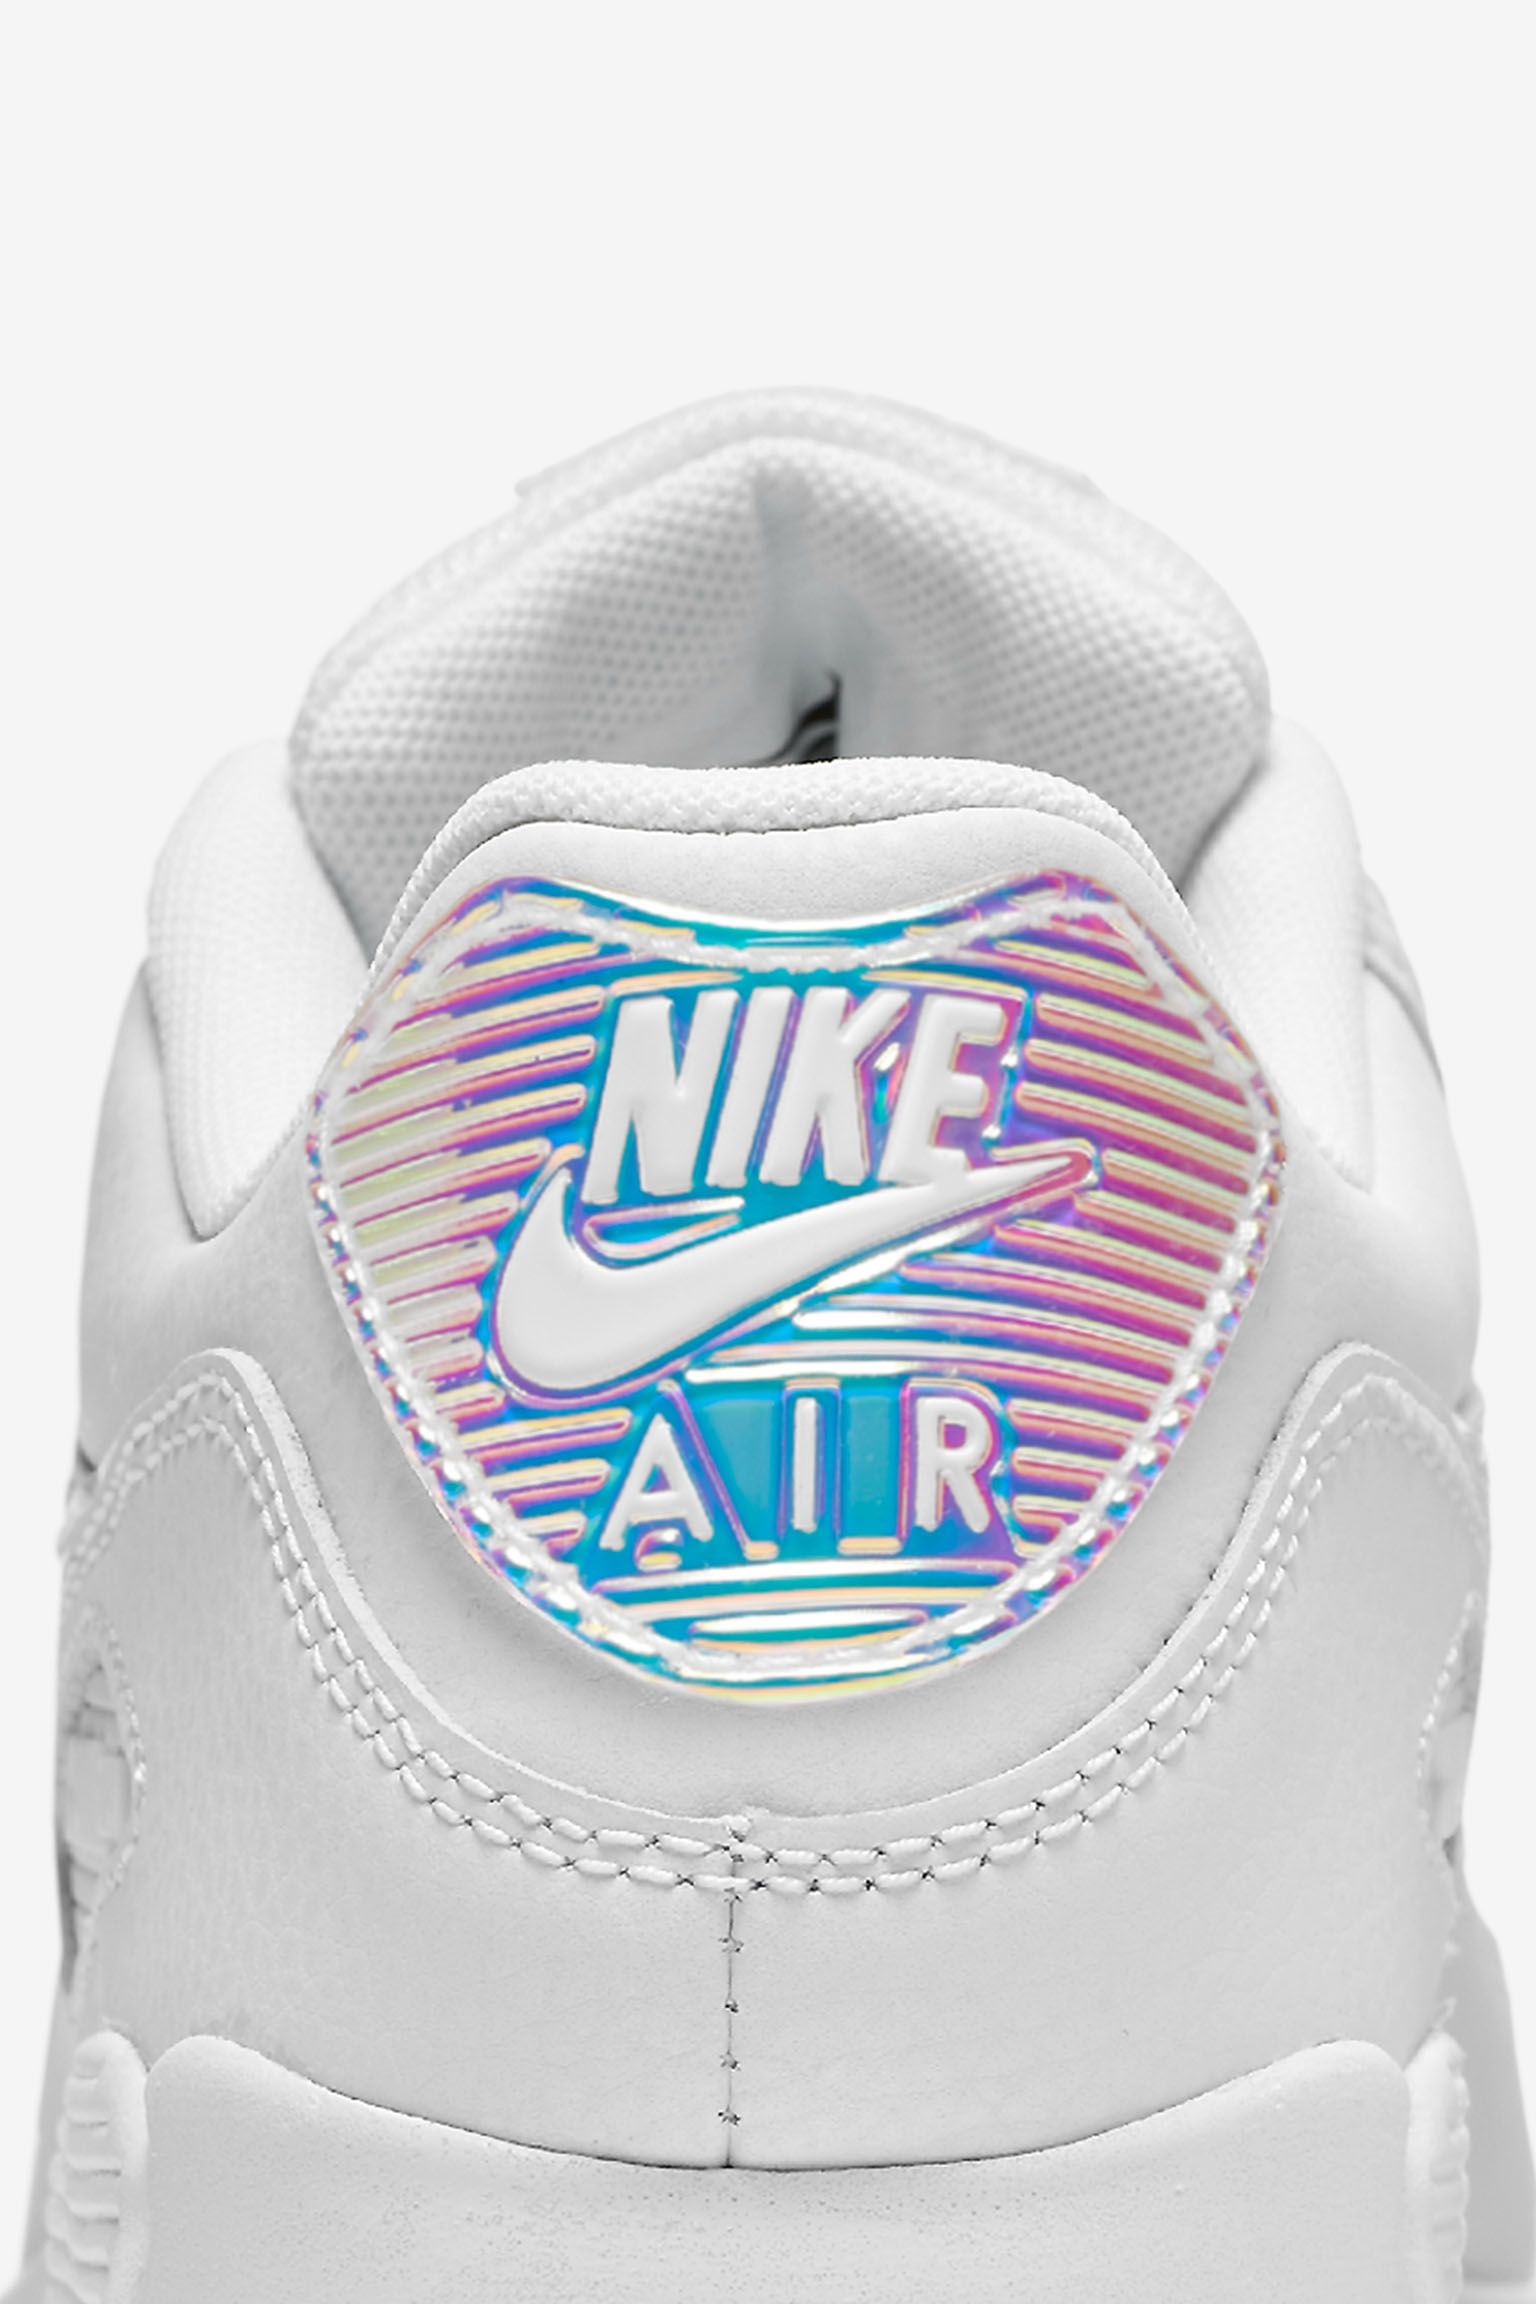 Nike Air Max 90 'Summer Shine'. Nike SNKRS